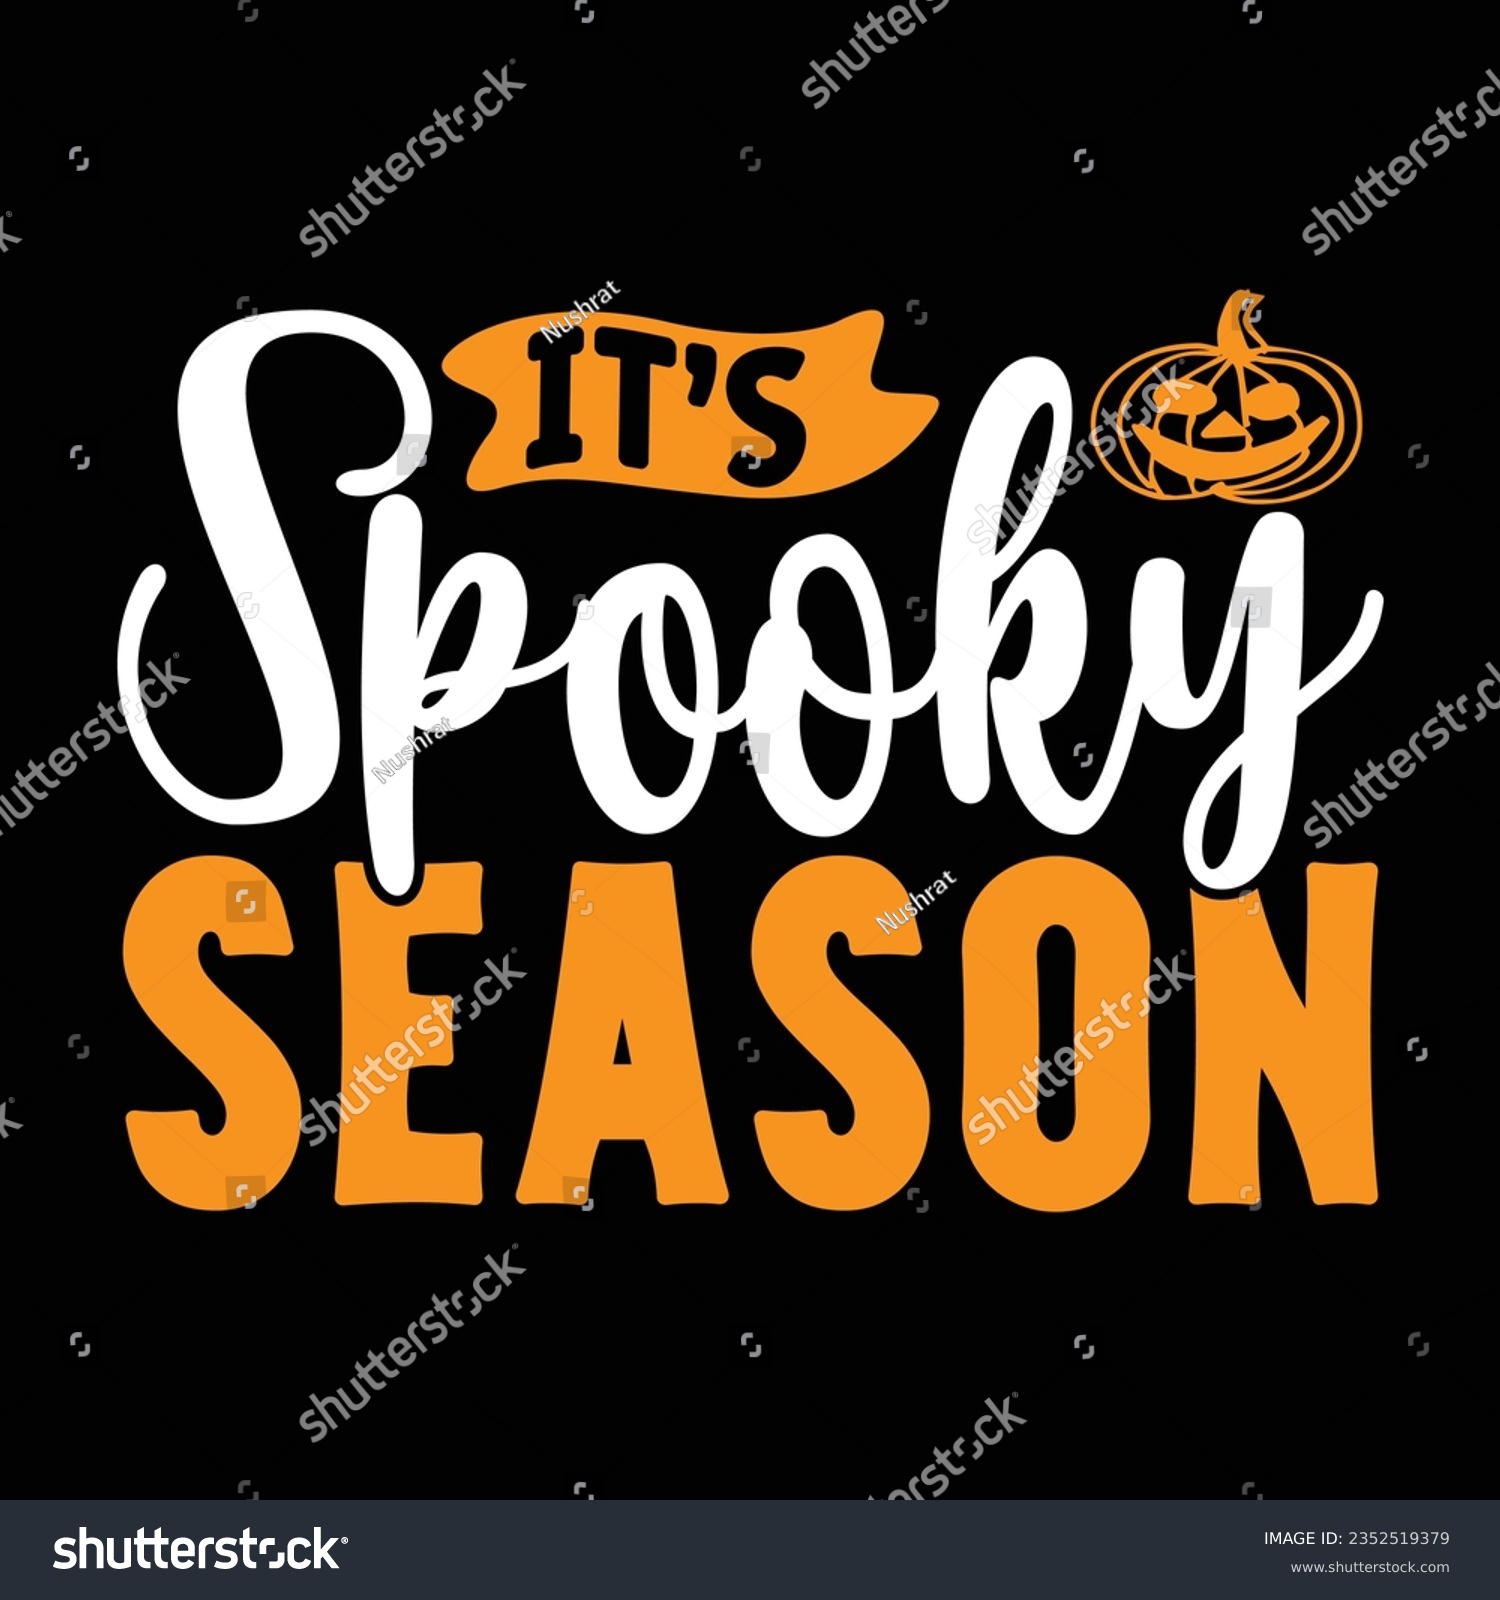 SVG of It’s Spooky Season,  New Halloween SVG Design Vector File. svg